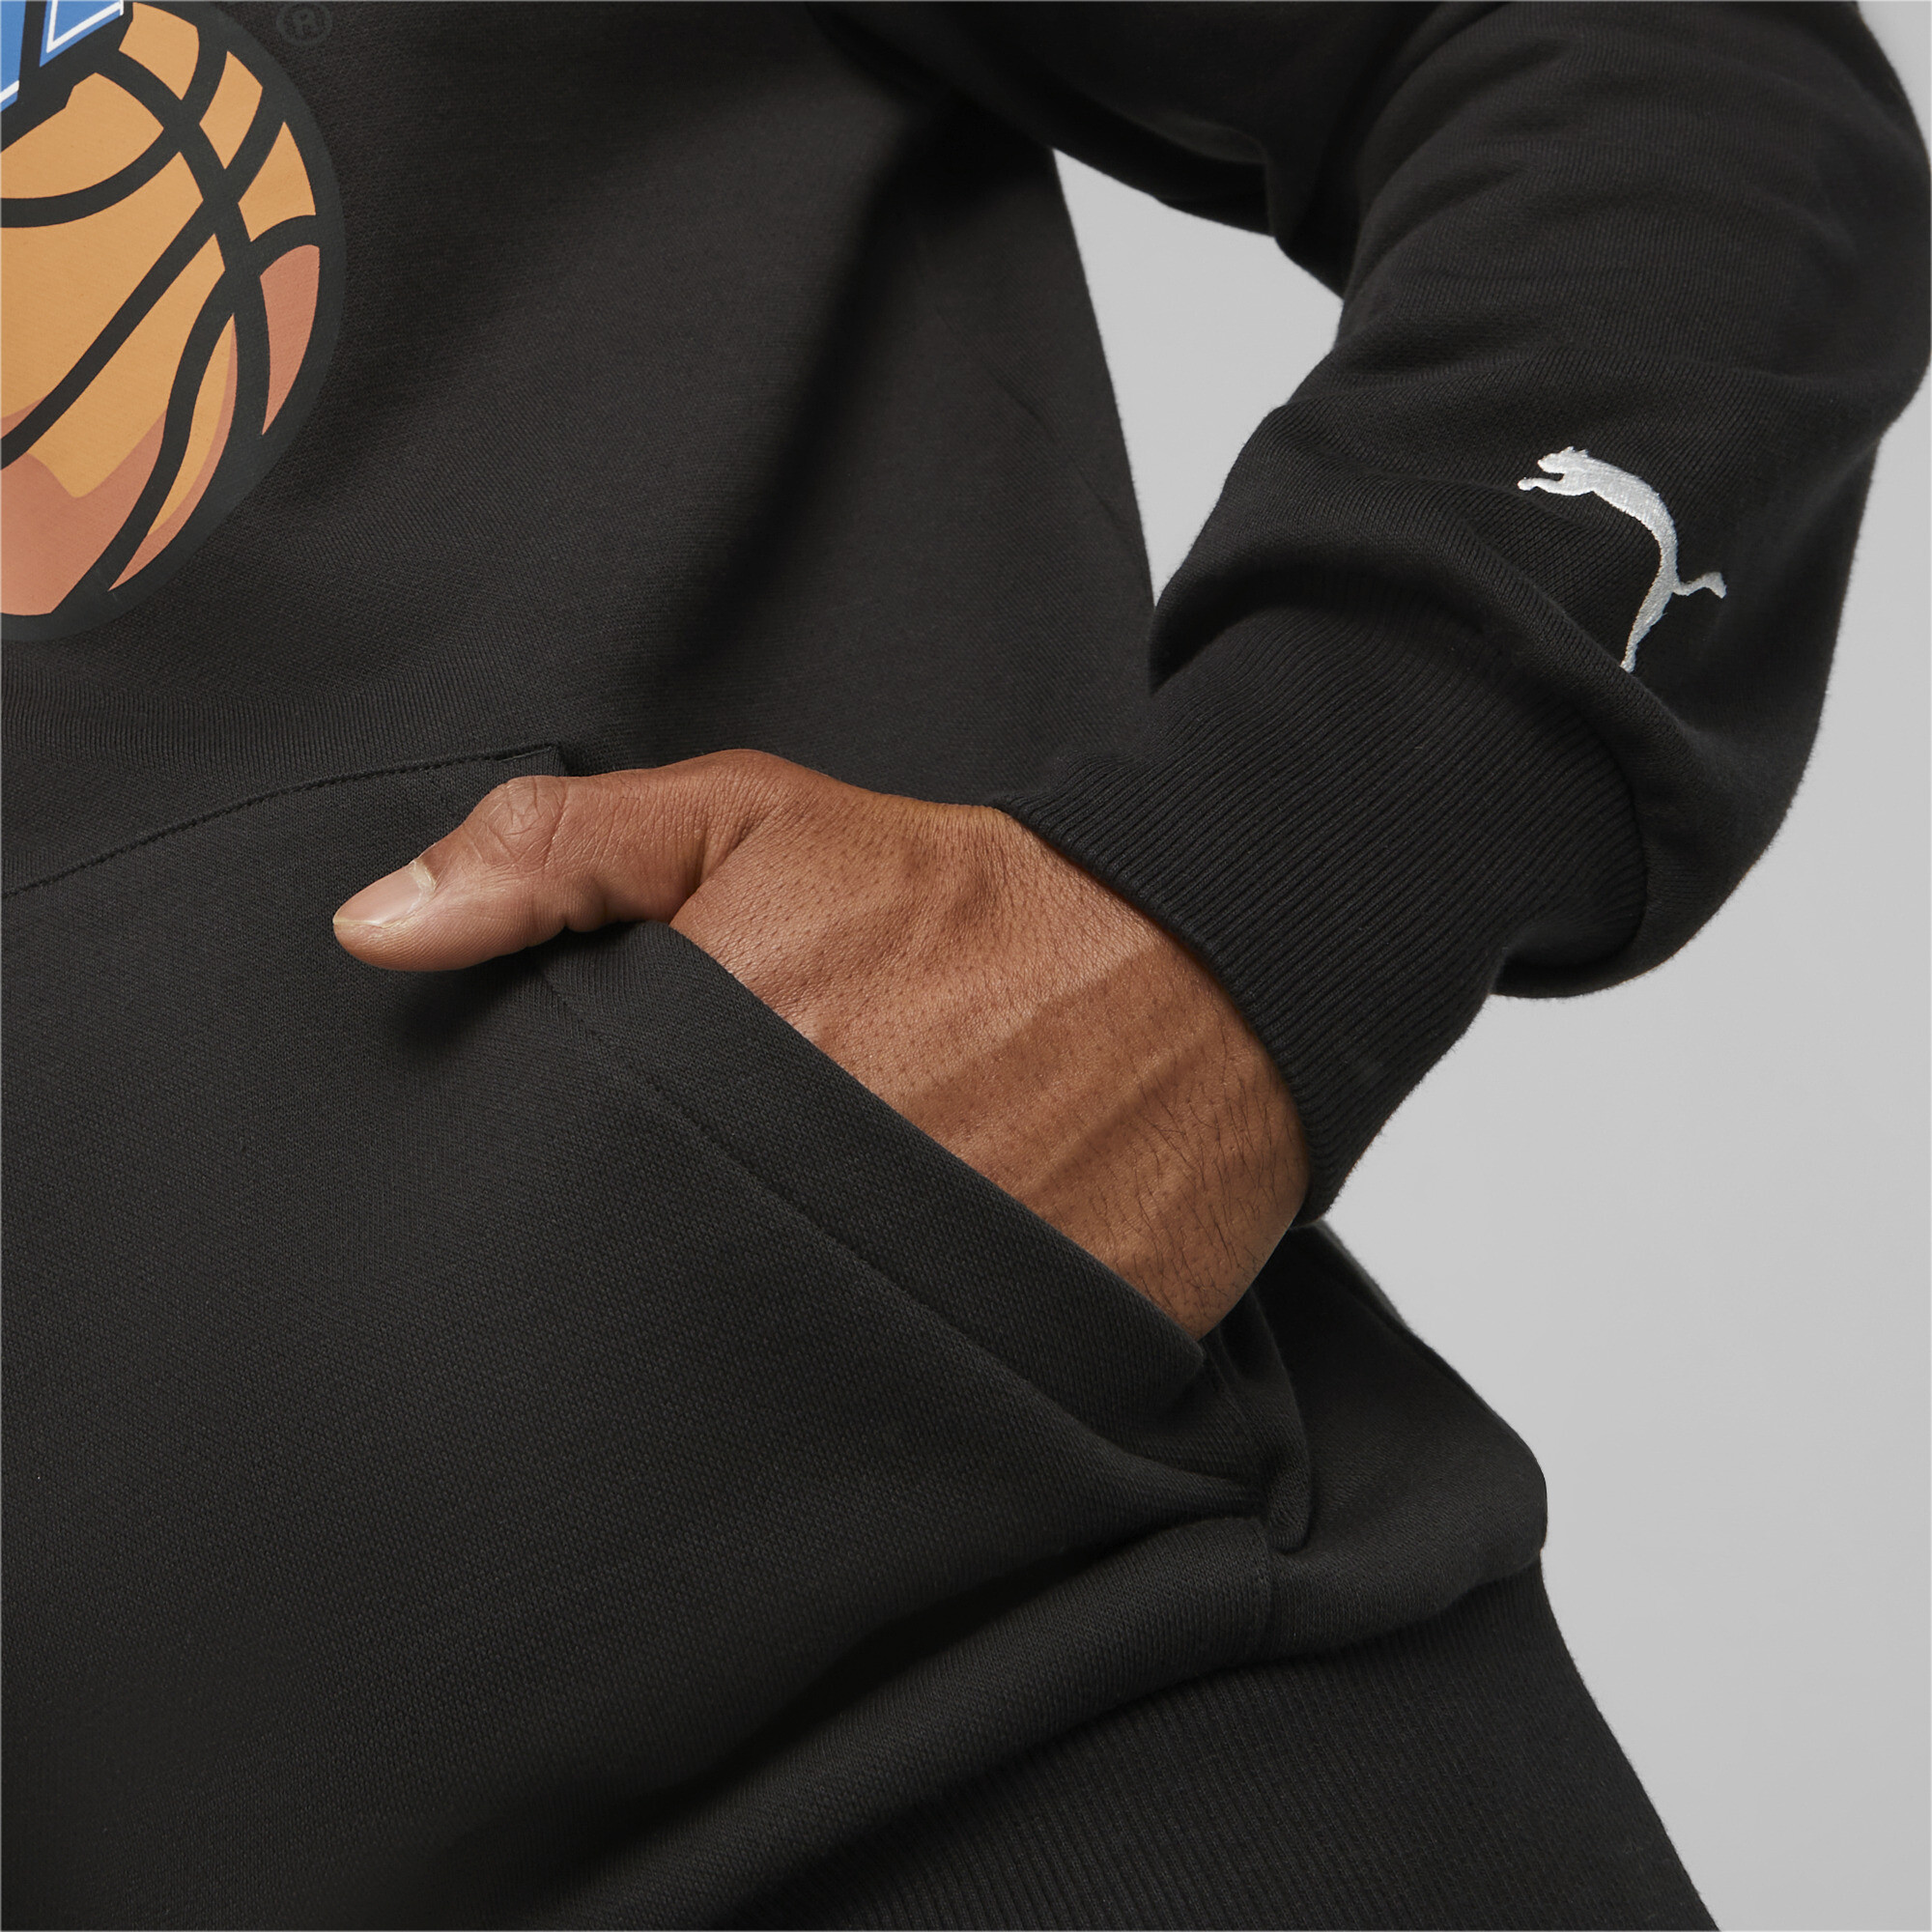 Men's PUMA DYLAN Basketball Hoodie In 10 - Black, Size XL